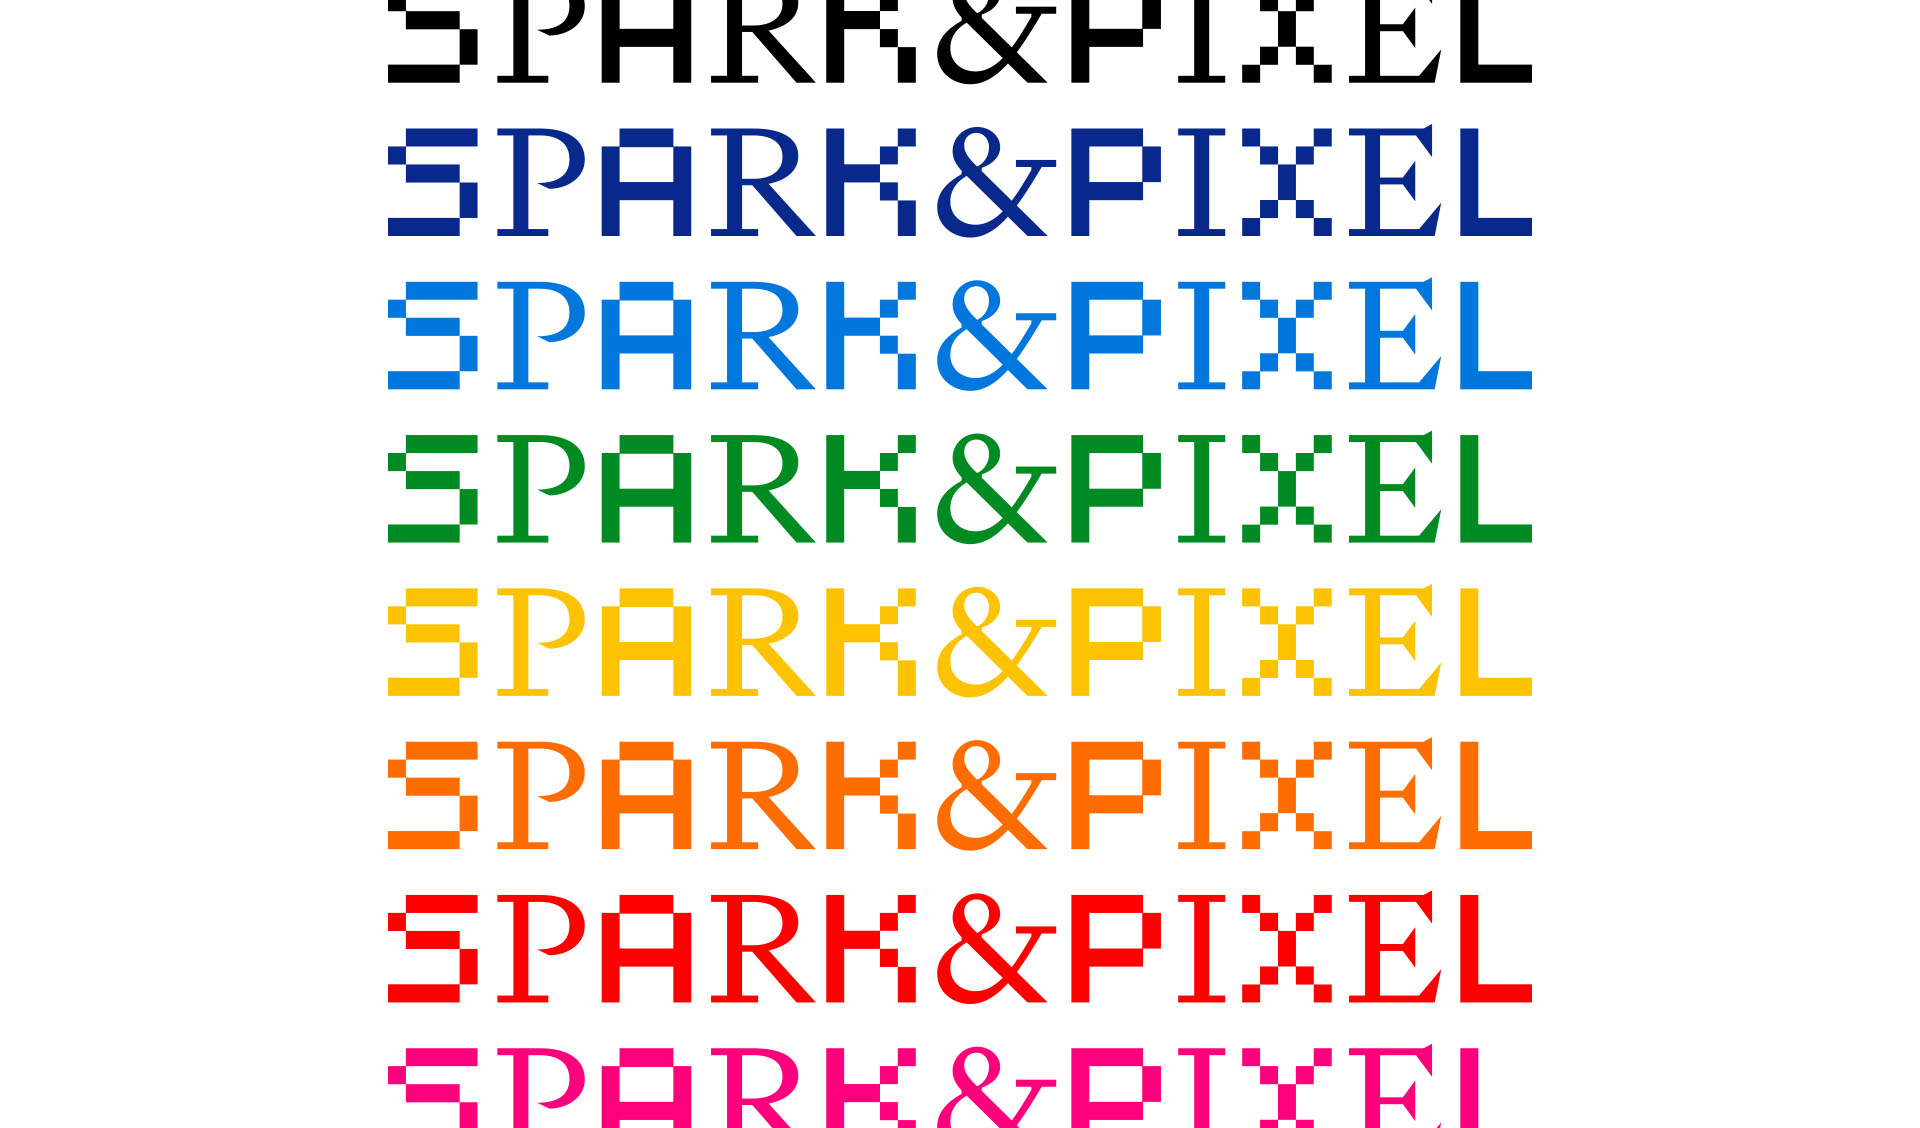 Spark&Pixel